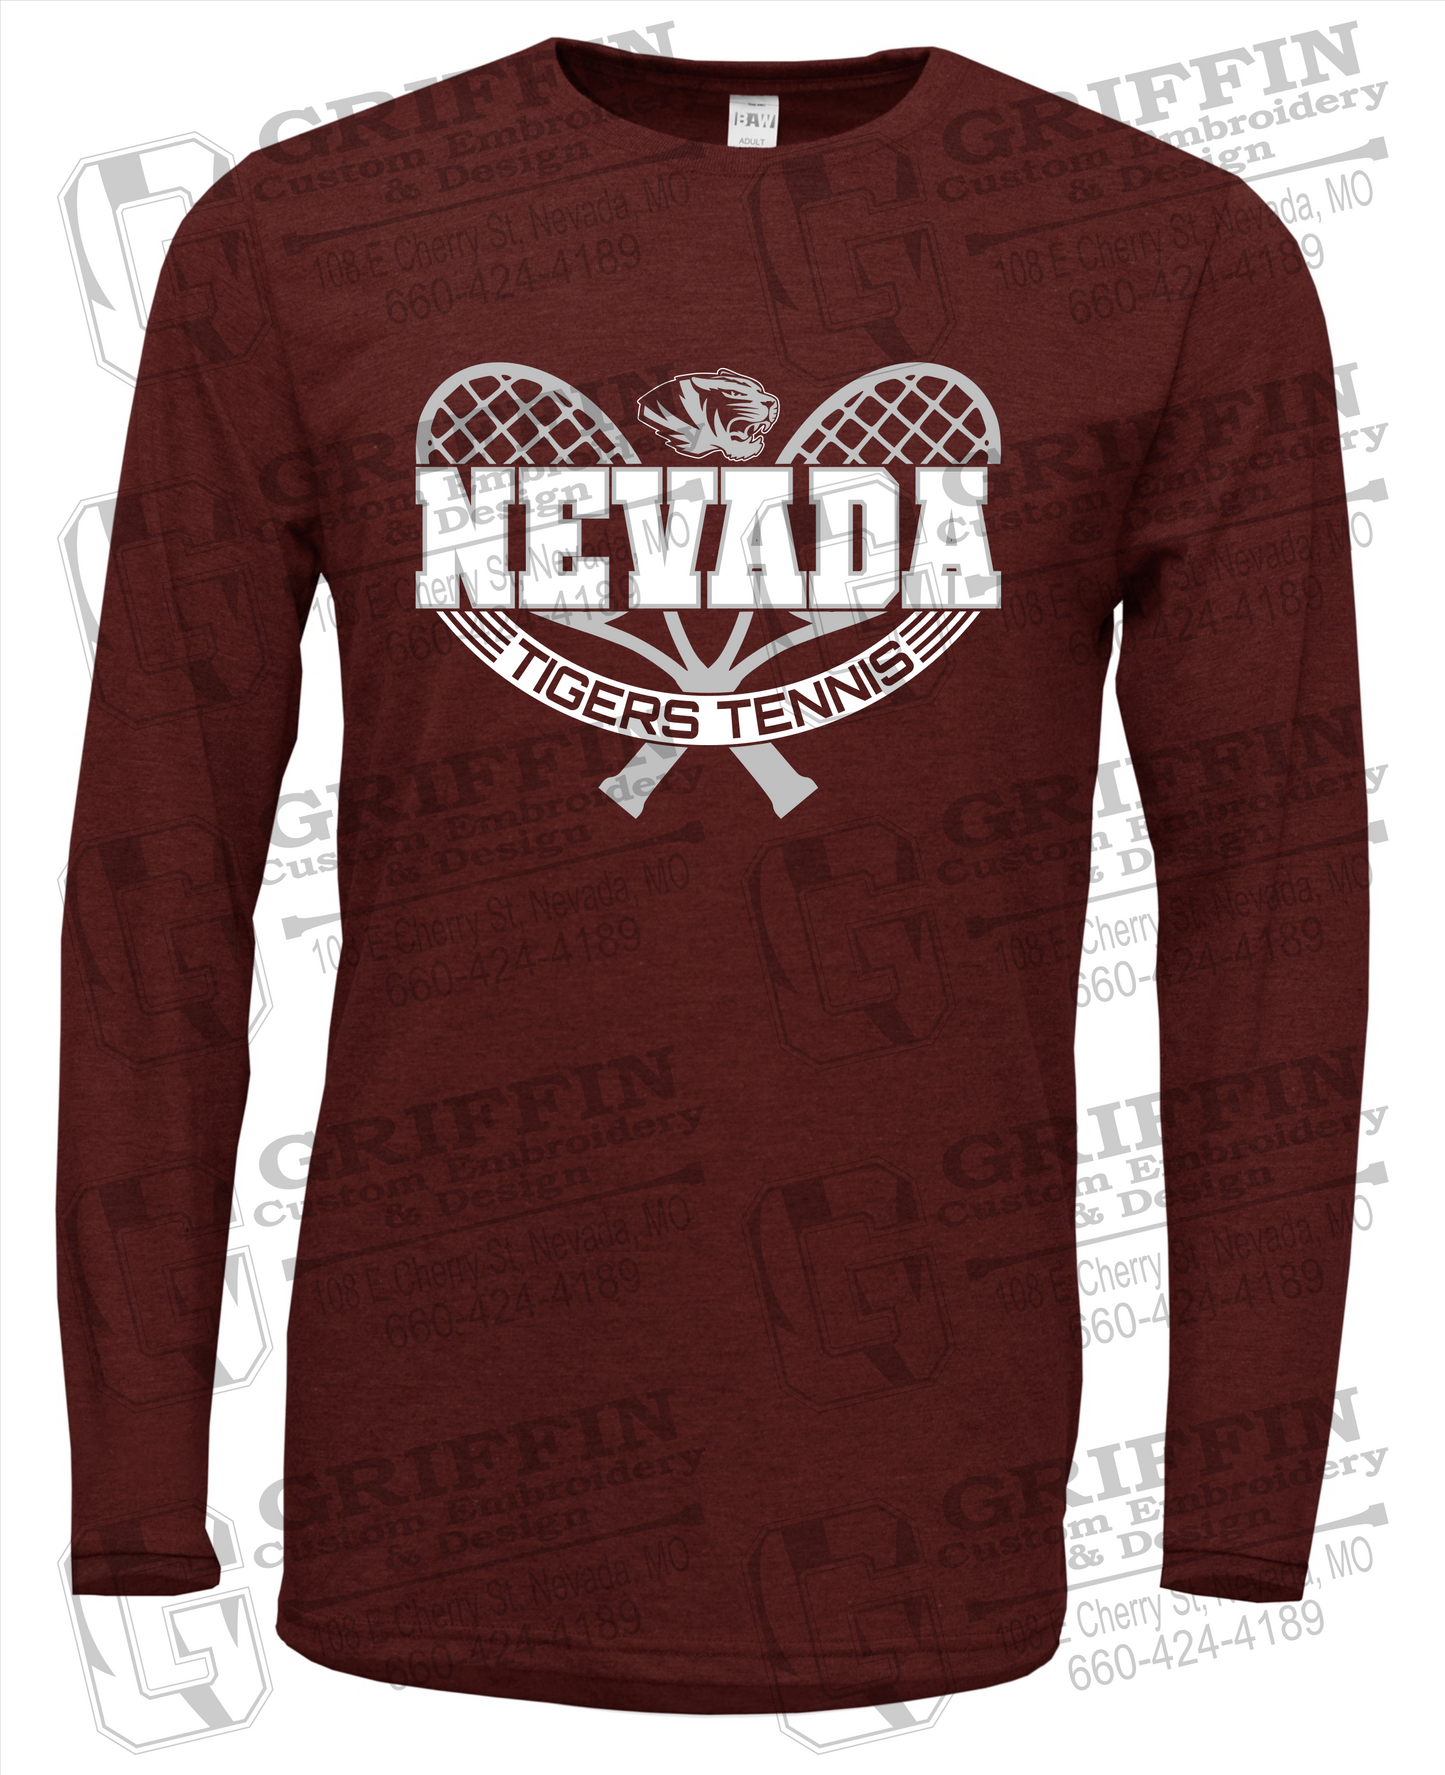 Soft-Tek Long Sleeve T-Shirt - Tennis - Nevada Tigers 21-Y